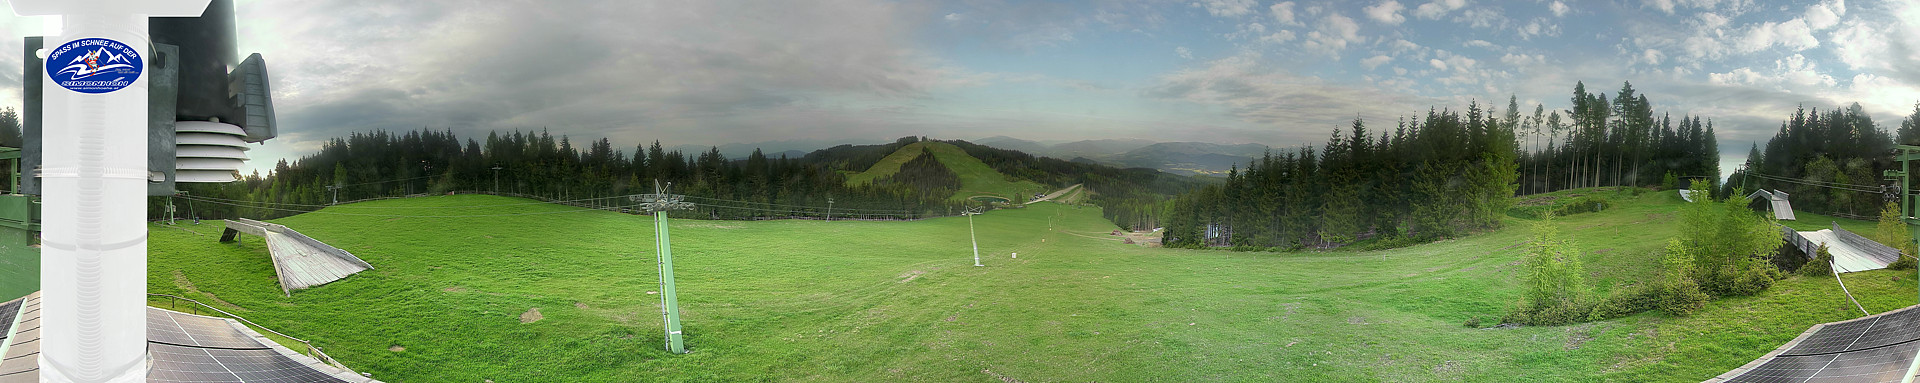 Panoramakamera Simonhöhe / St. Urban / Österreich